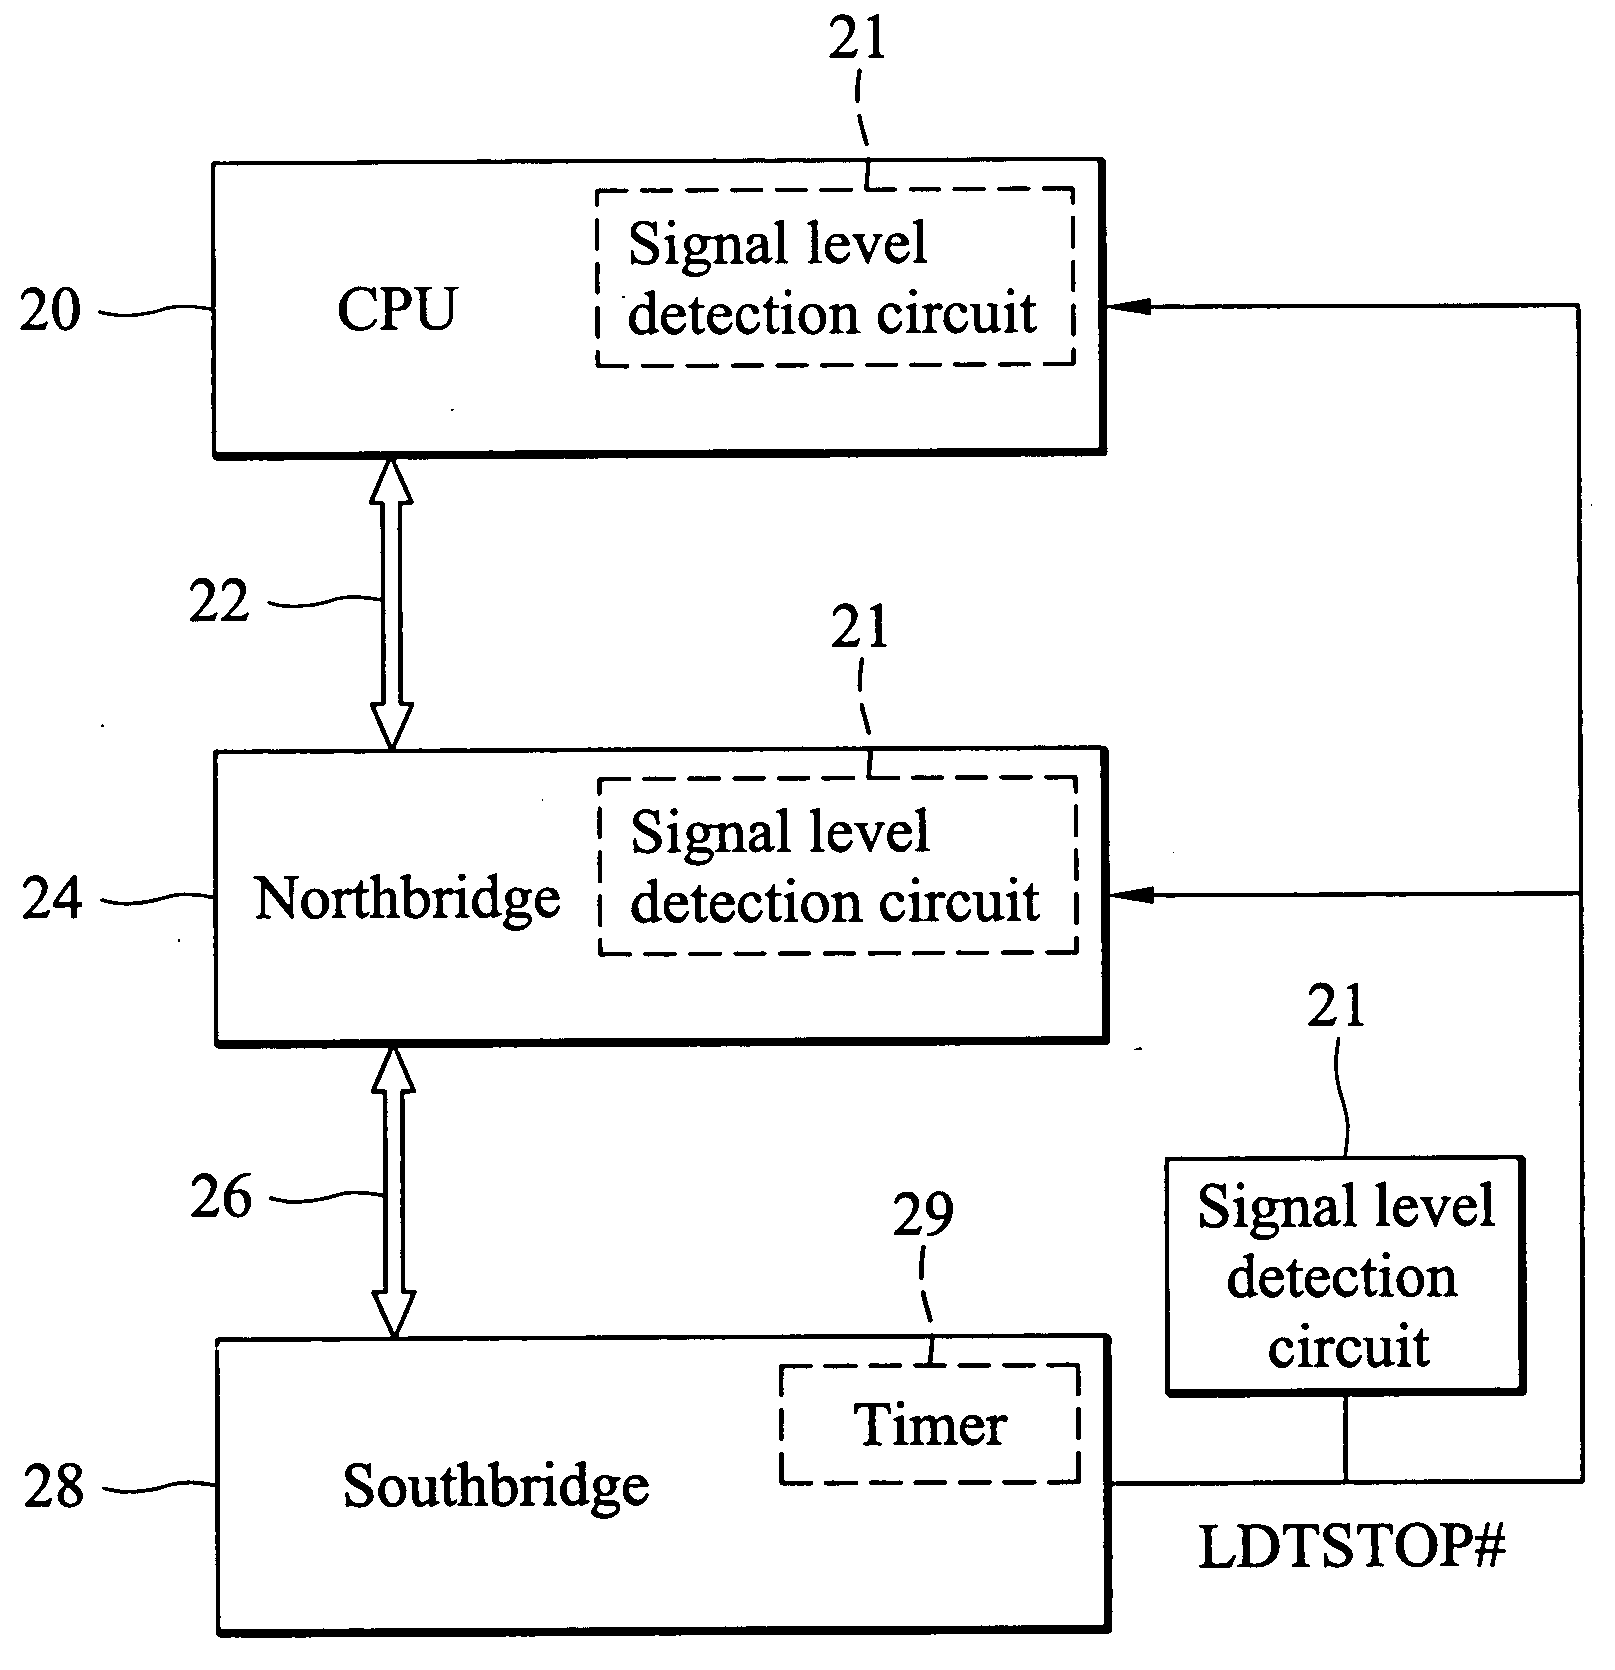 Method for verifying optimization of processor link